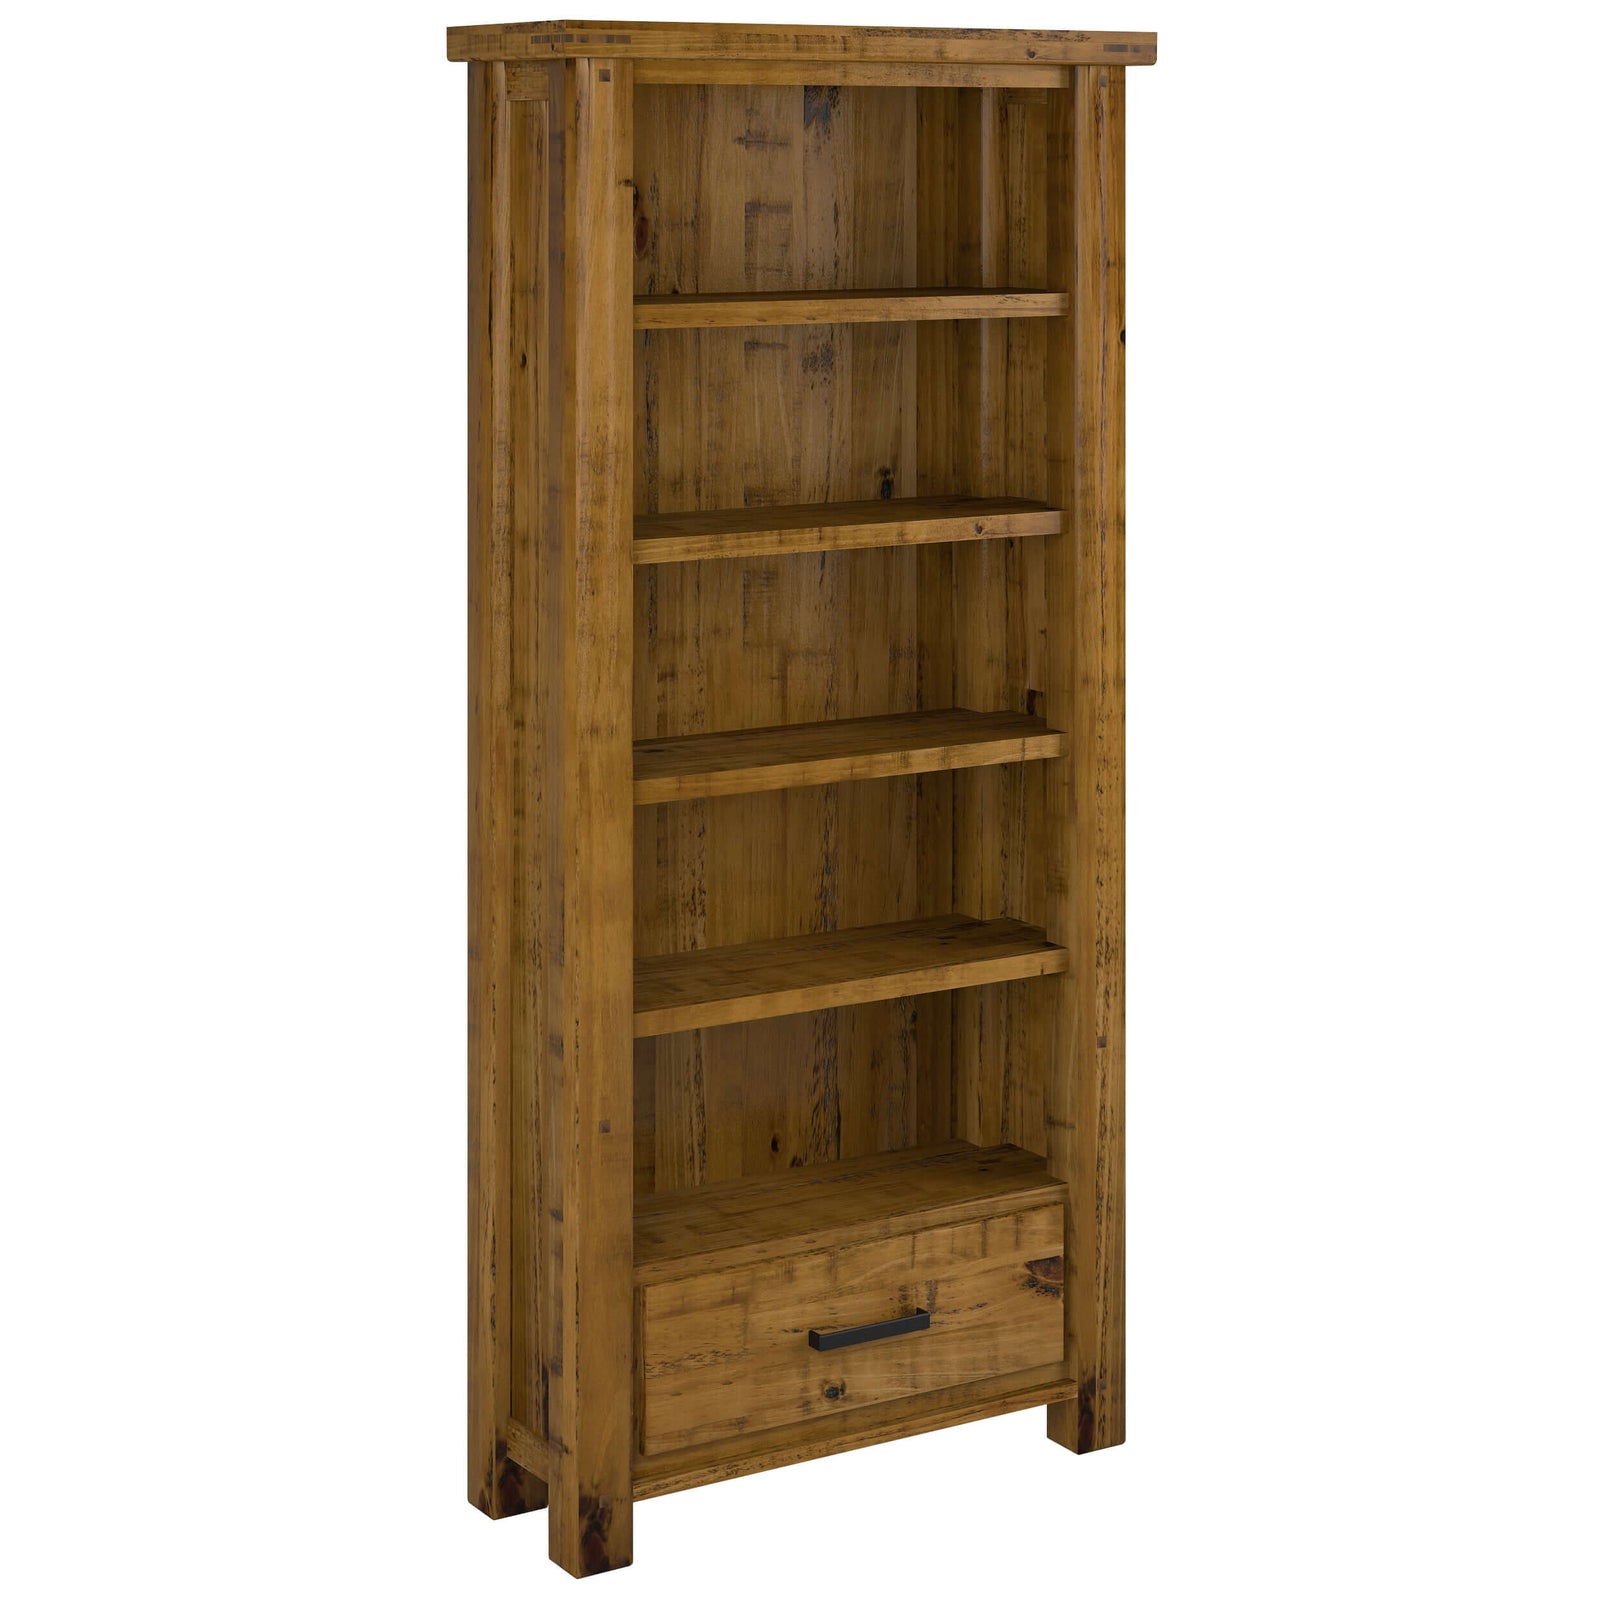 Teasel Bookshelf 190cm Bookcase Display Unit Solid Pine Timber Wood - Rustic Oak-Upinteriors